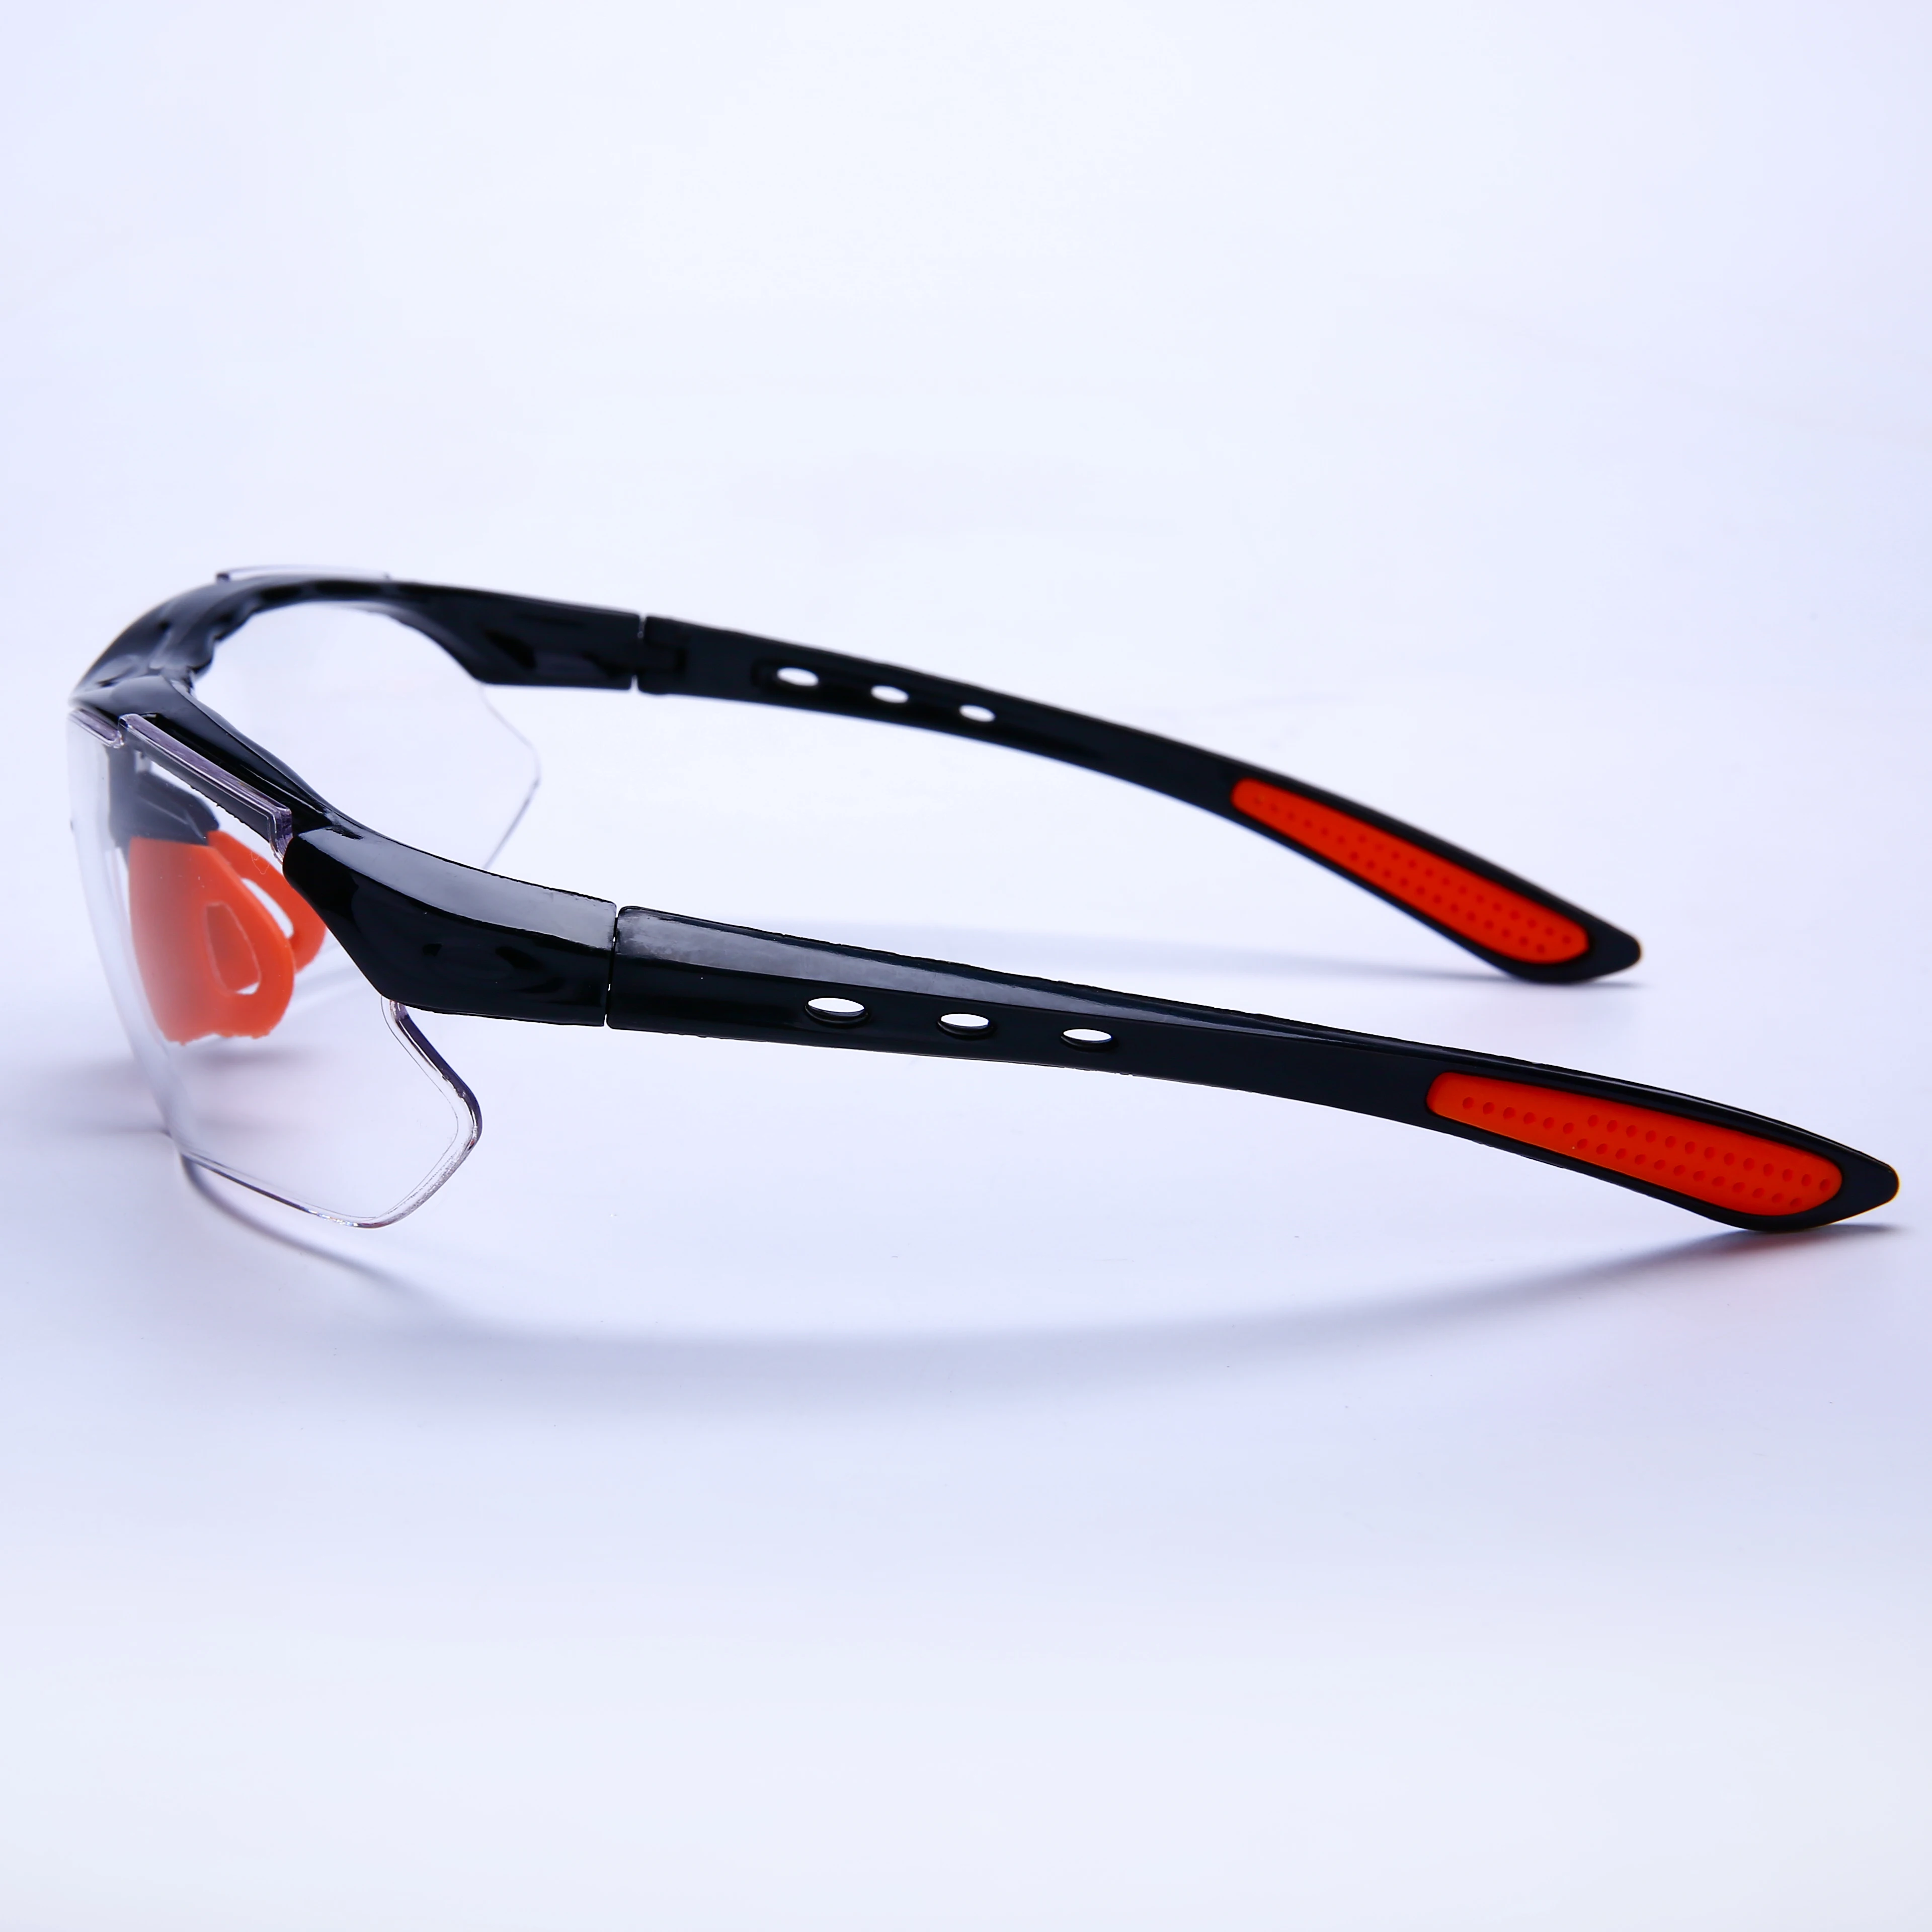 Latest stylish Black frame Safety Glasses for working use